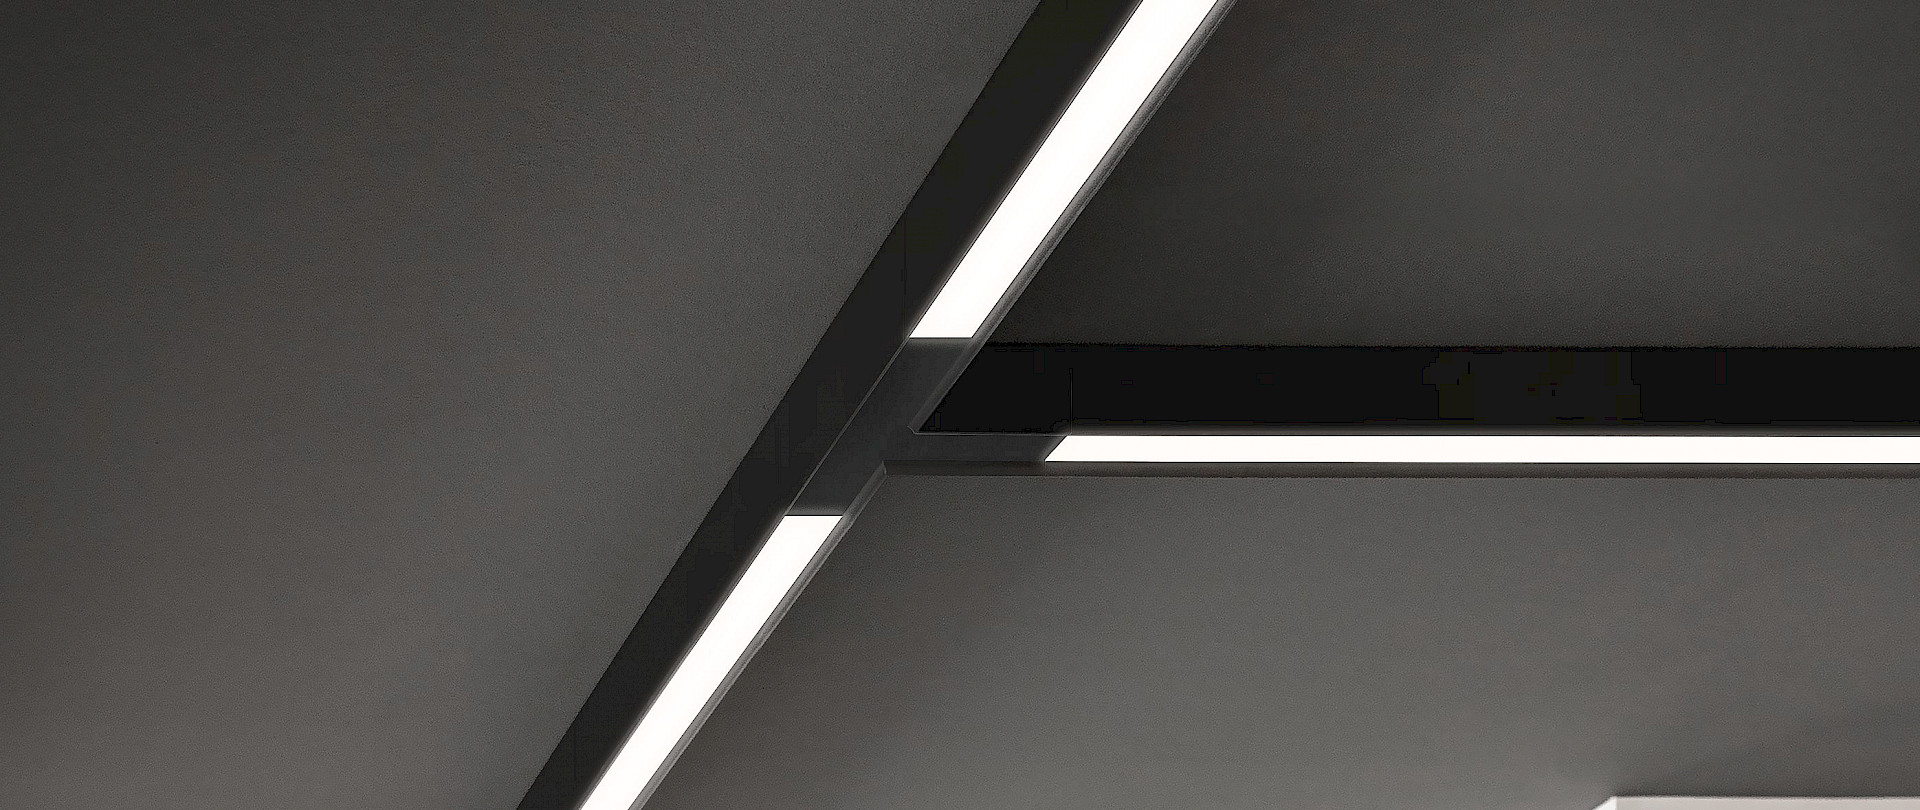 TeamItalia - No-light ceiling light joint